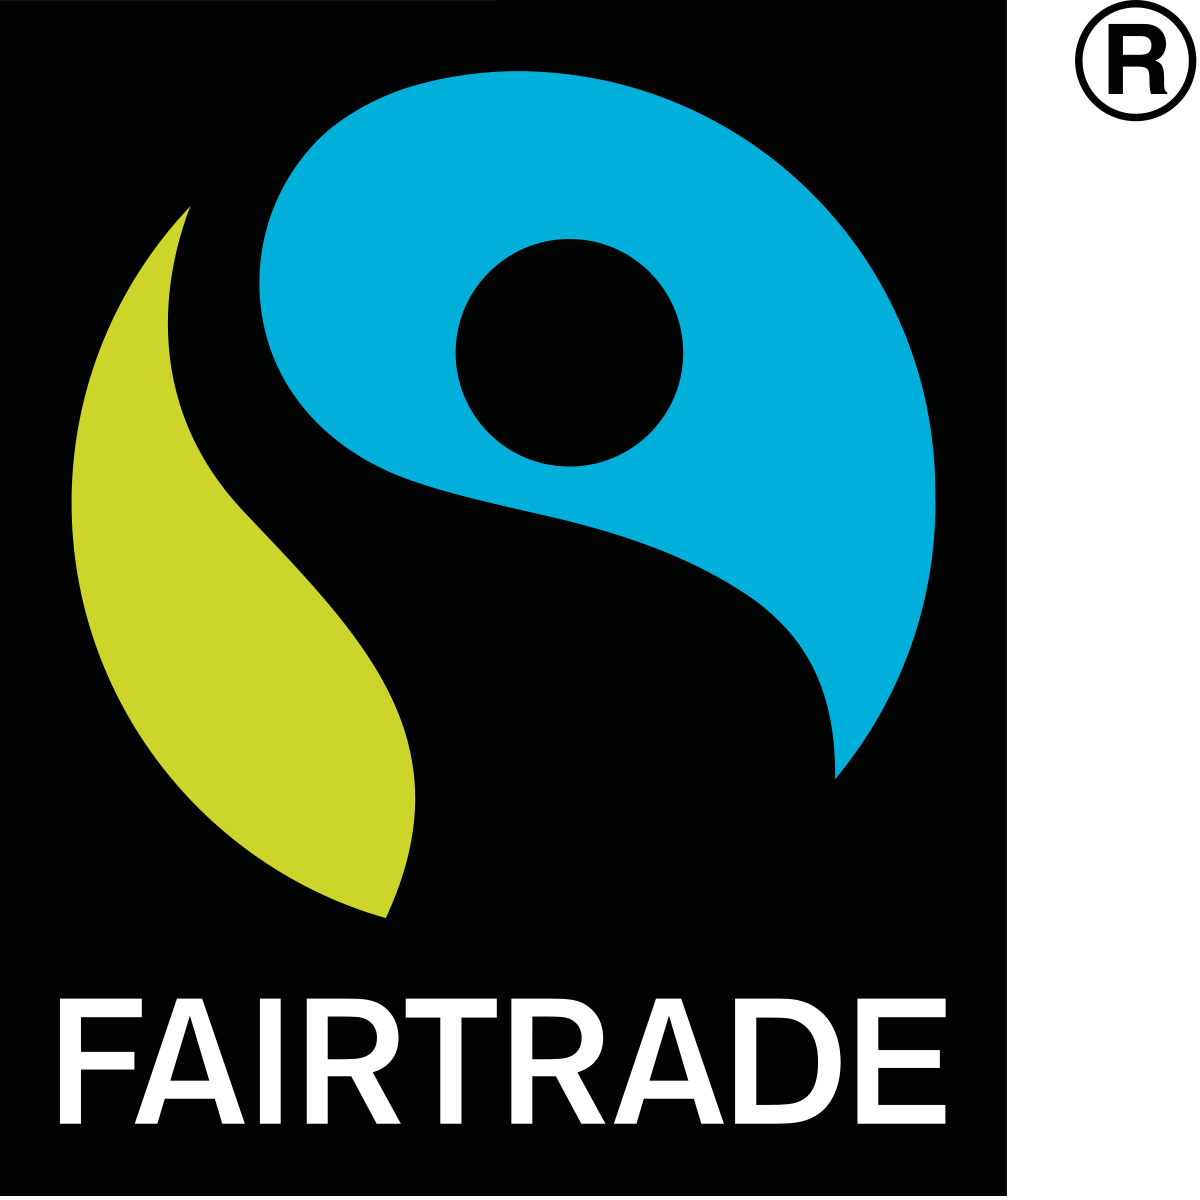 Fairtrade_Certification_Mark.svg.png